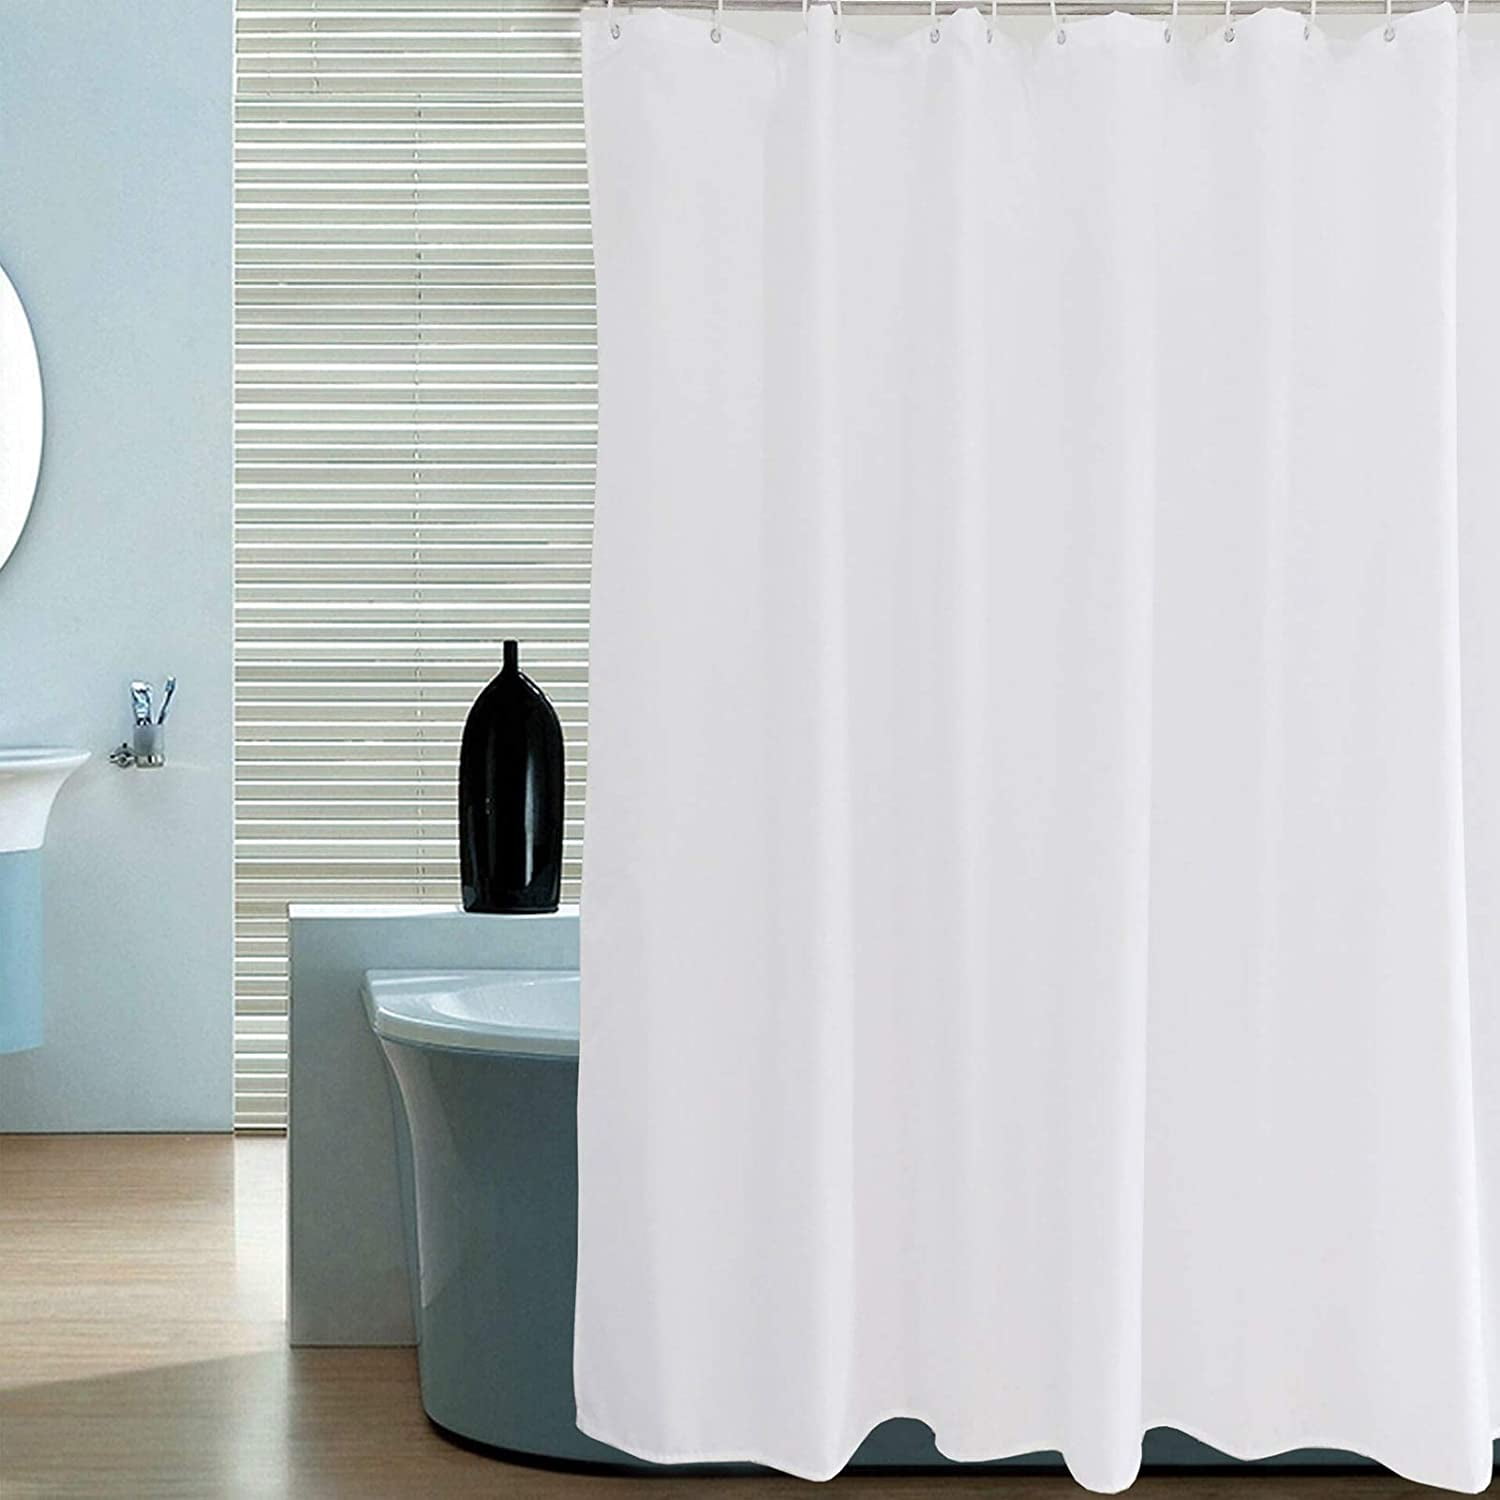 Chicks Flower Waterproof Bathroom Polyester Shower Curtain Liner Water Resistant 